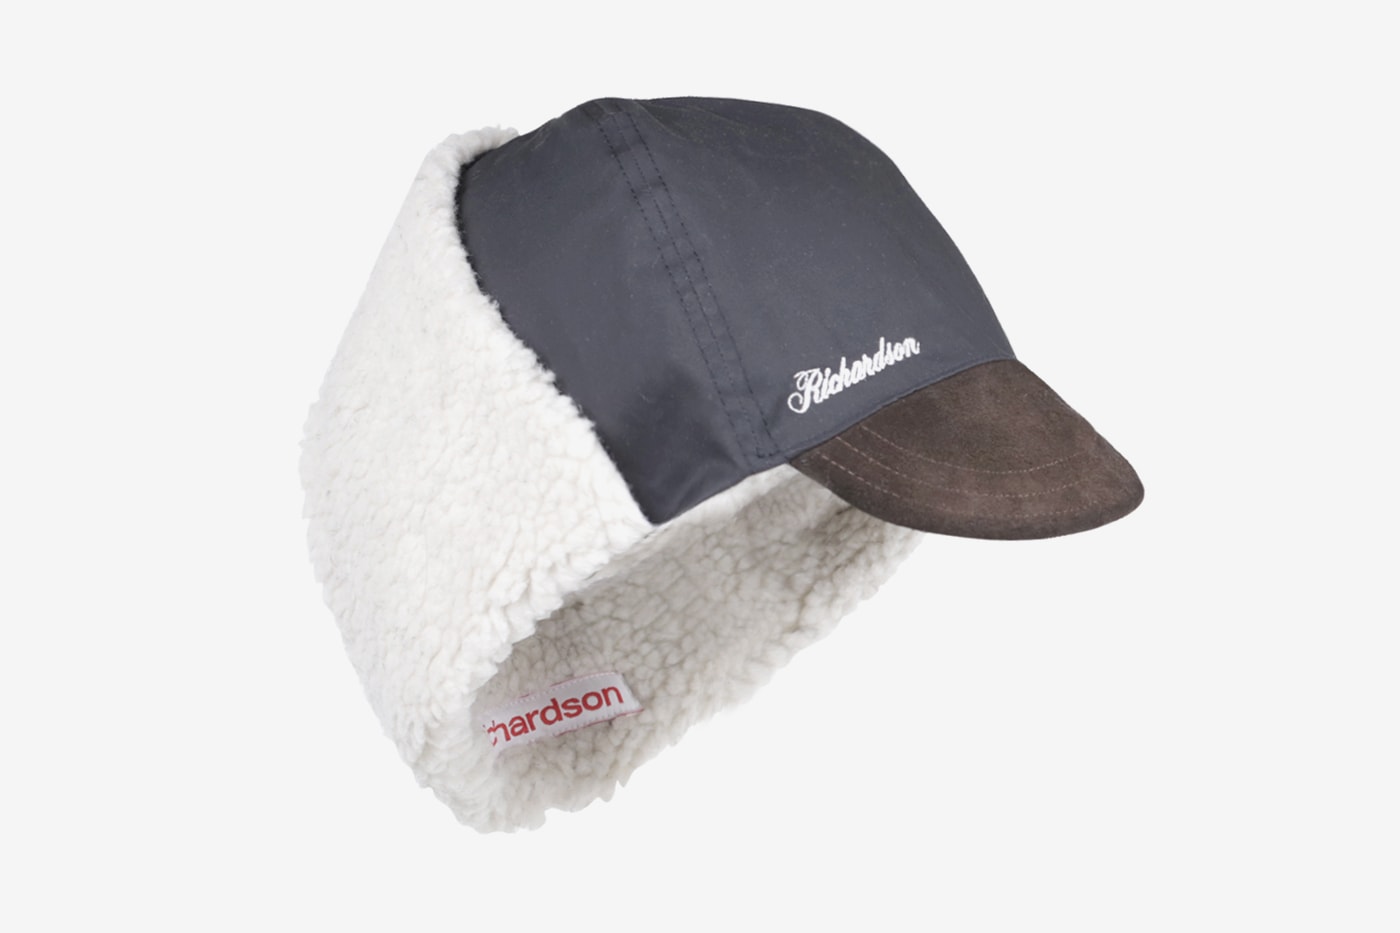 Richardson Fall Winter 2020 Glyph Capsule menswear streetwear lookbooks jackets hoodies tees hats ash tray garments pieces